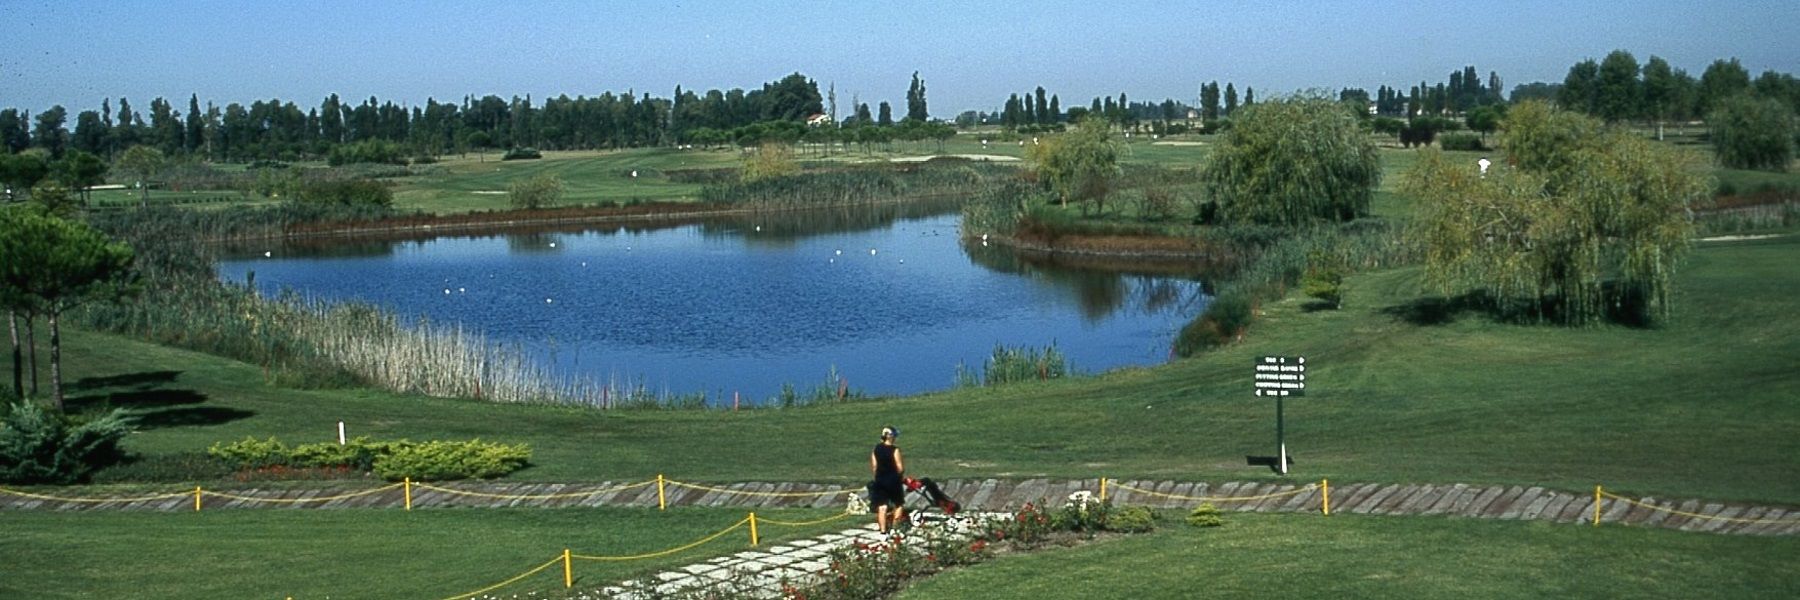 Adriatic Golf Club Cervia - Termine im Mai